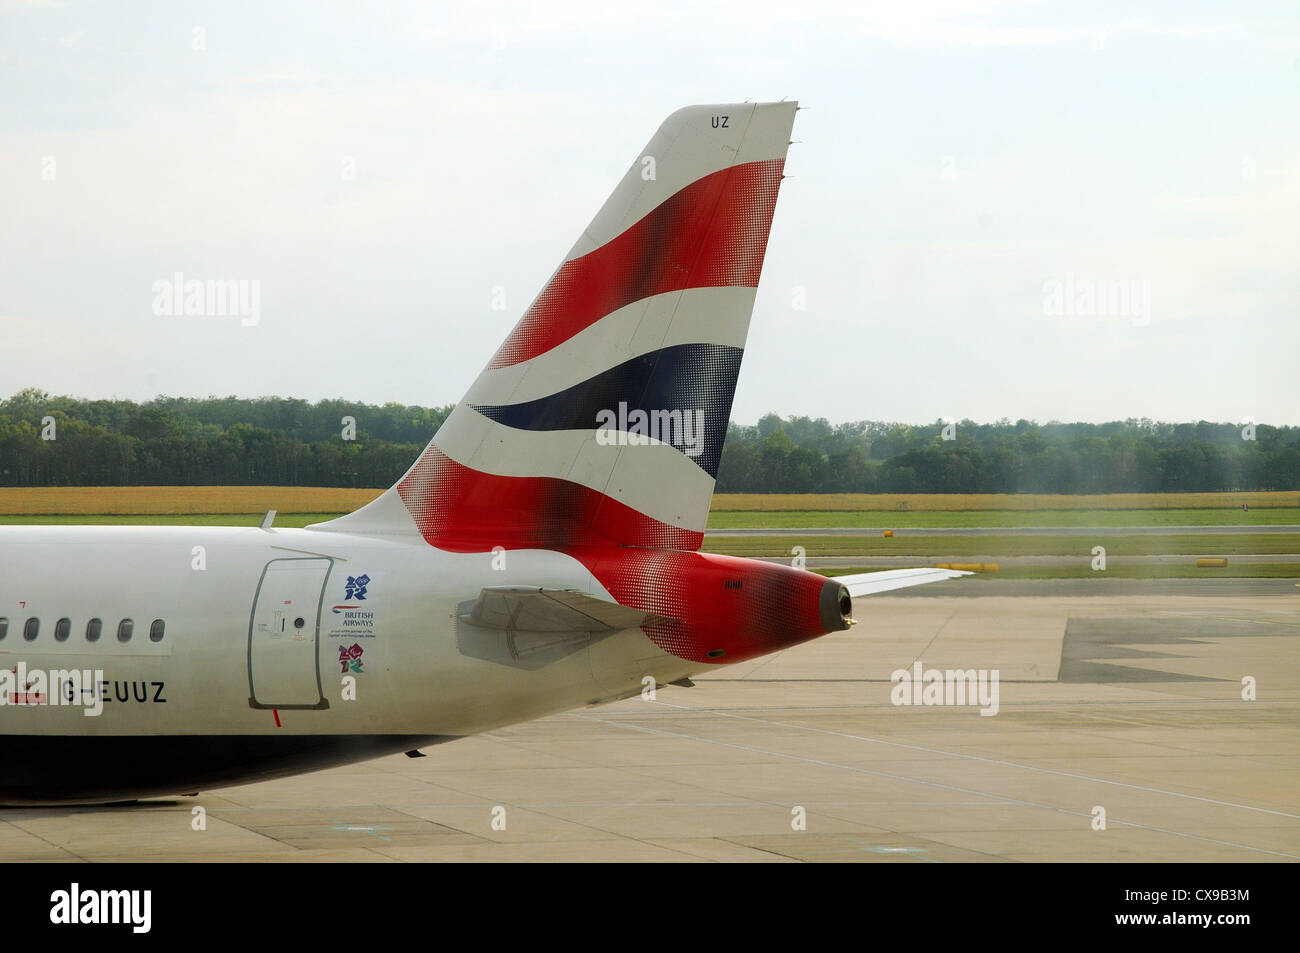 British Airways logo on tail plane of passenger aircraft Airbus A 320 Stock Photo